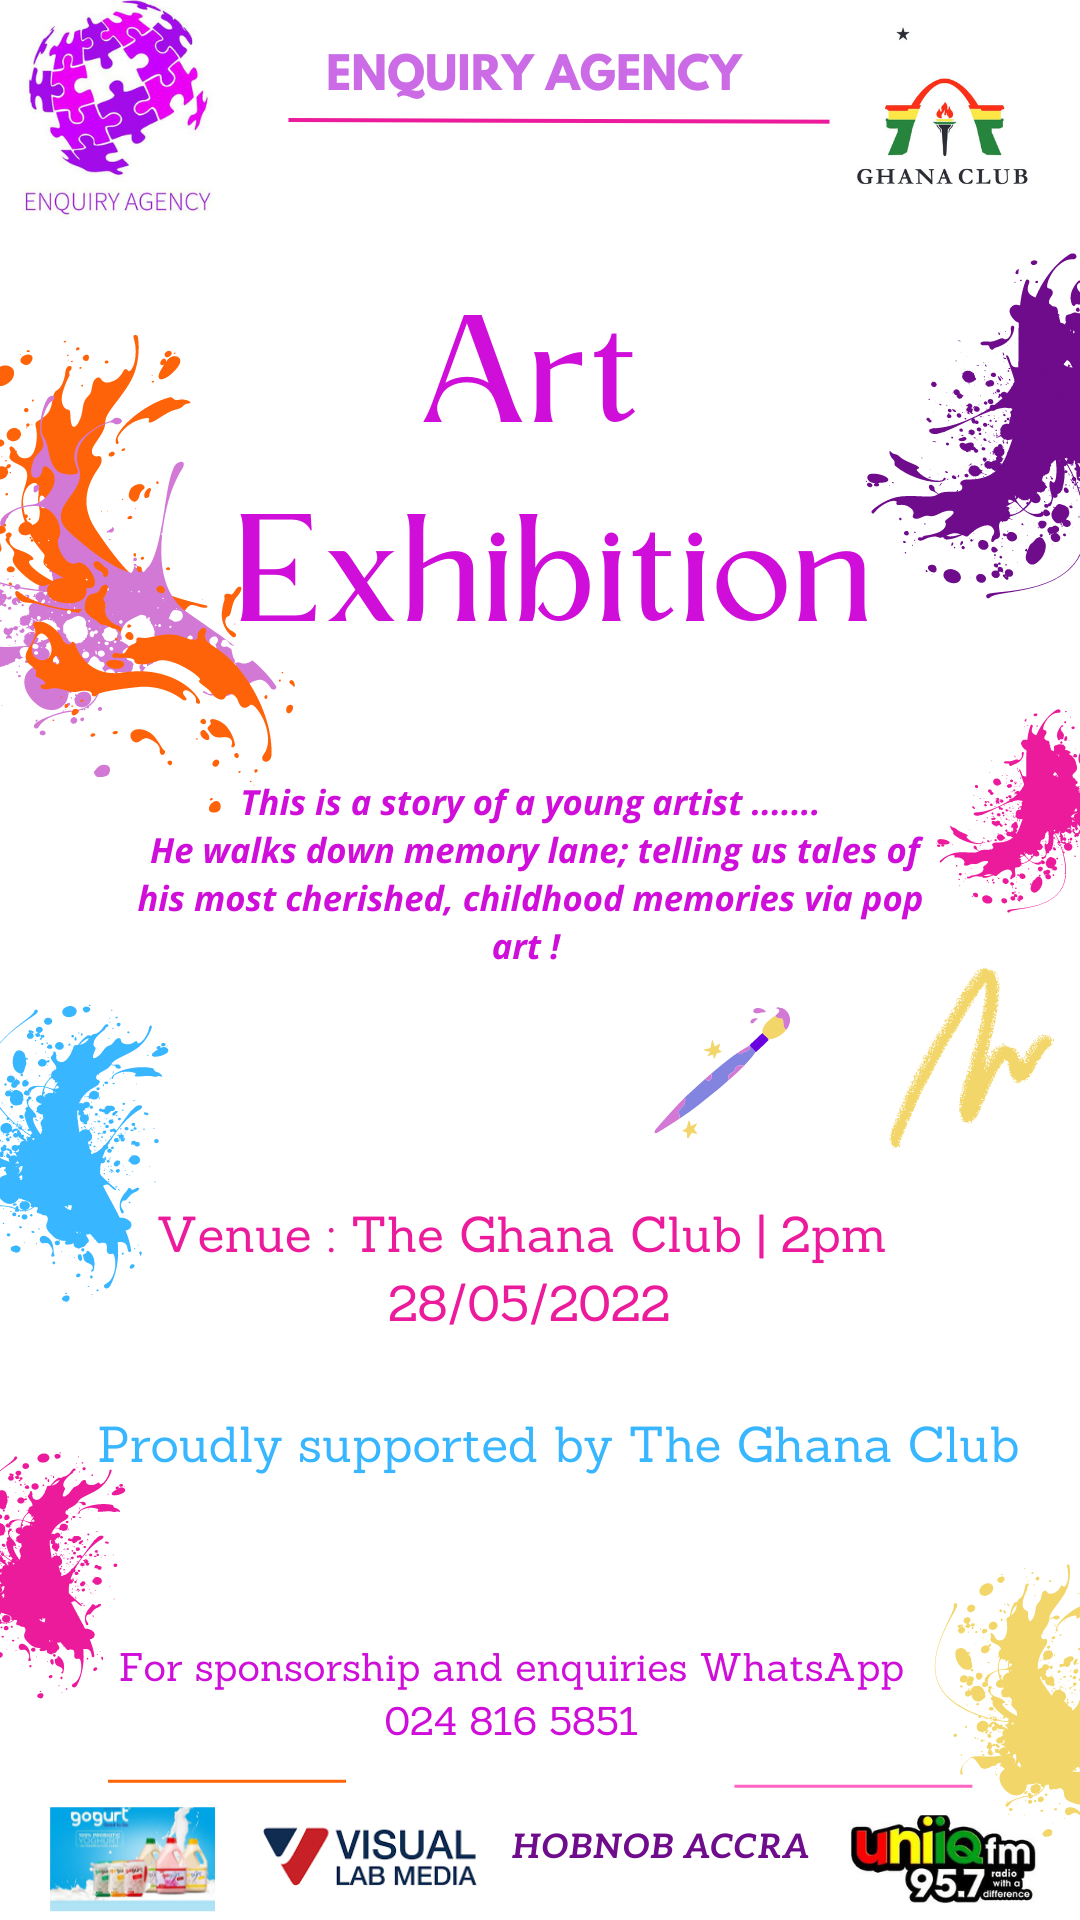 Enquiry Agency ART Exhibition/Hobnob Accra